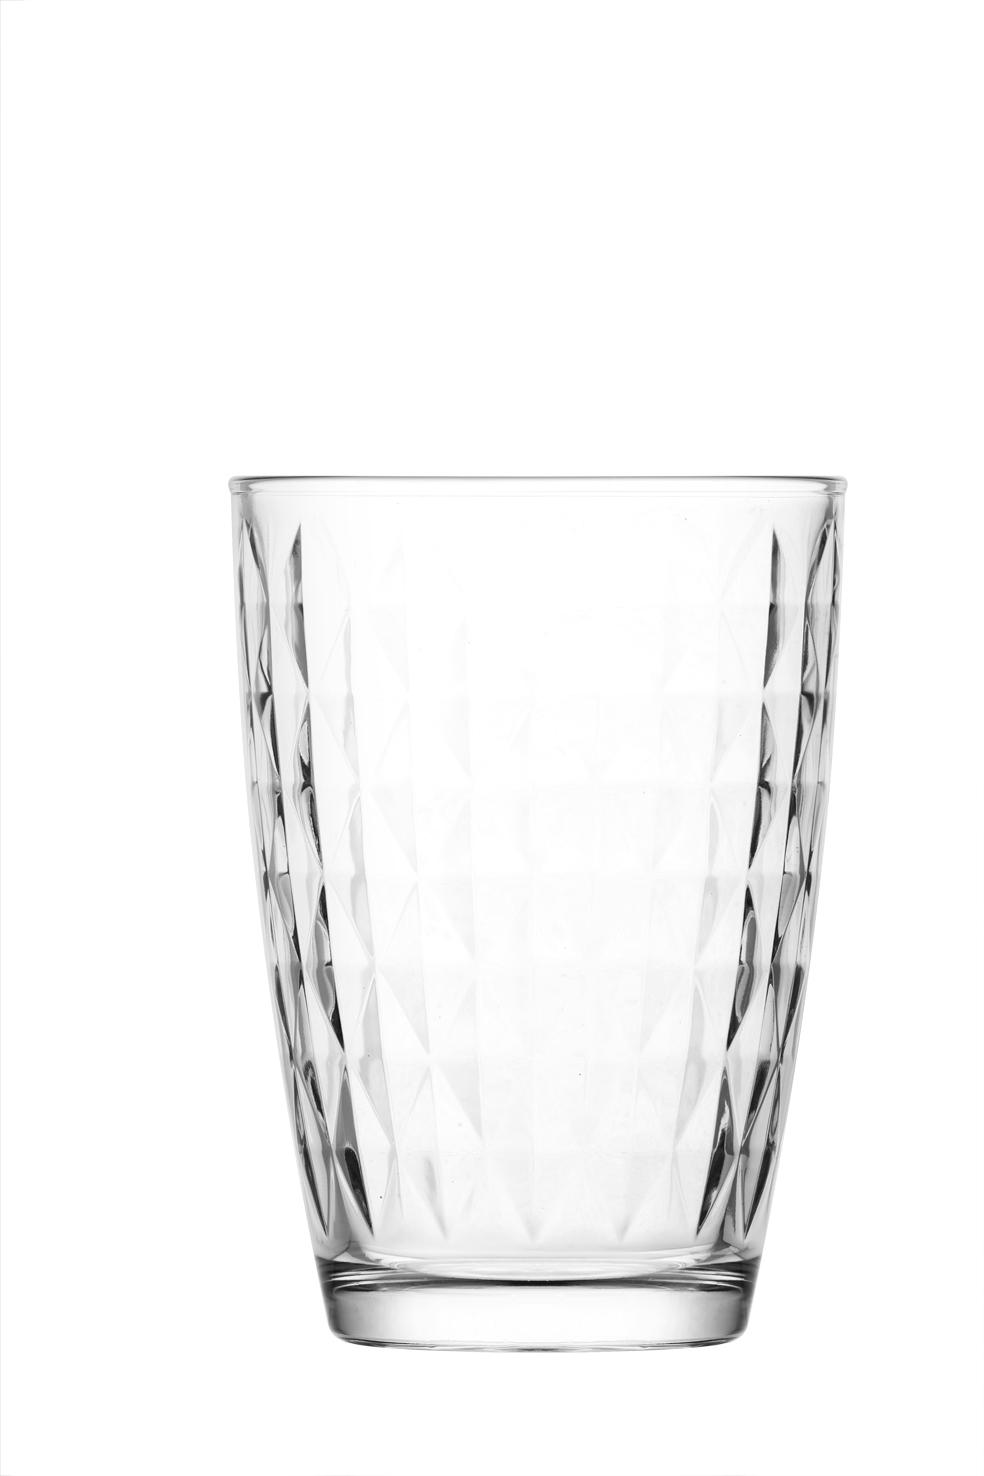 Trinkglas Trix ca. 415 ml - Transparent, KONVENTIONELL, Glas (8,6/12,2cm) - Luca Bessoni